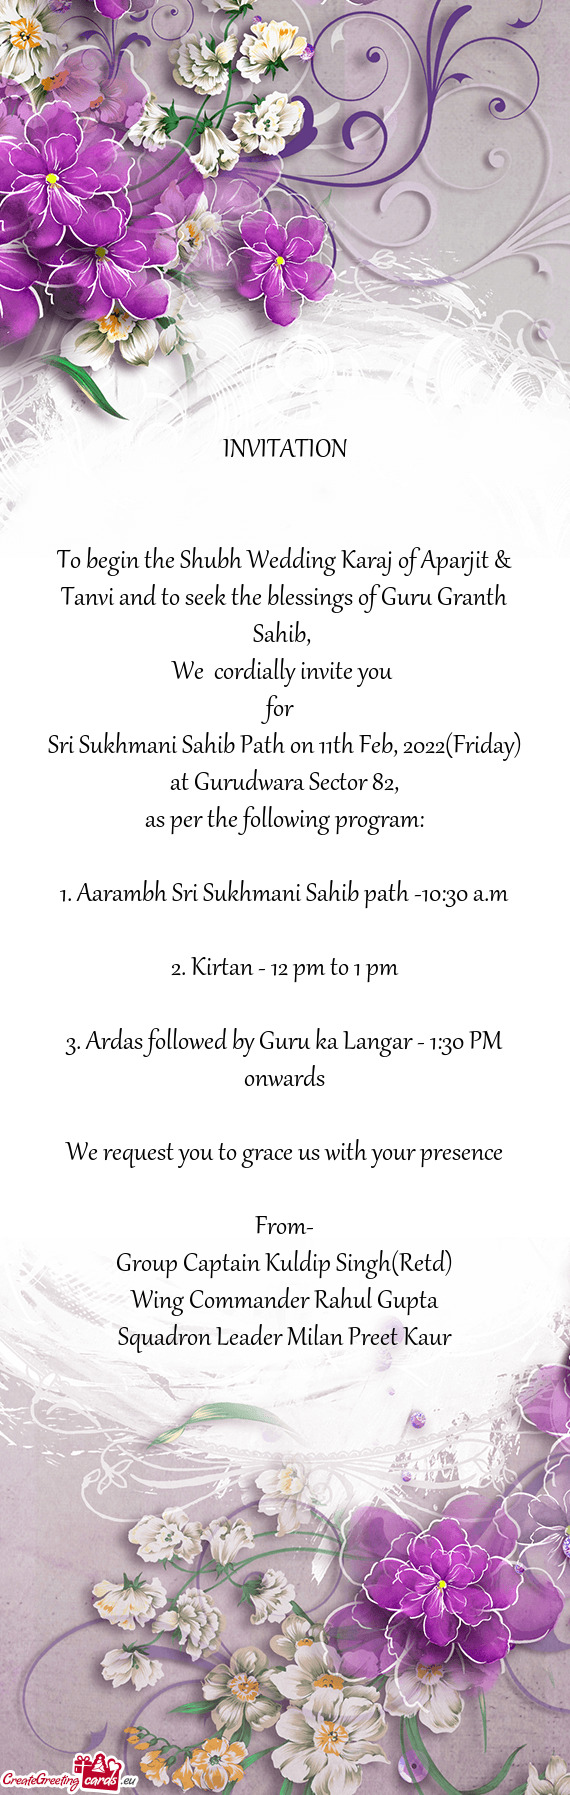 To begin the Shubh Wedding Karaj of Aparjit & Tanvi and to seek the blessings of Guru Granth Sahib